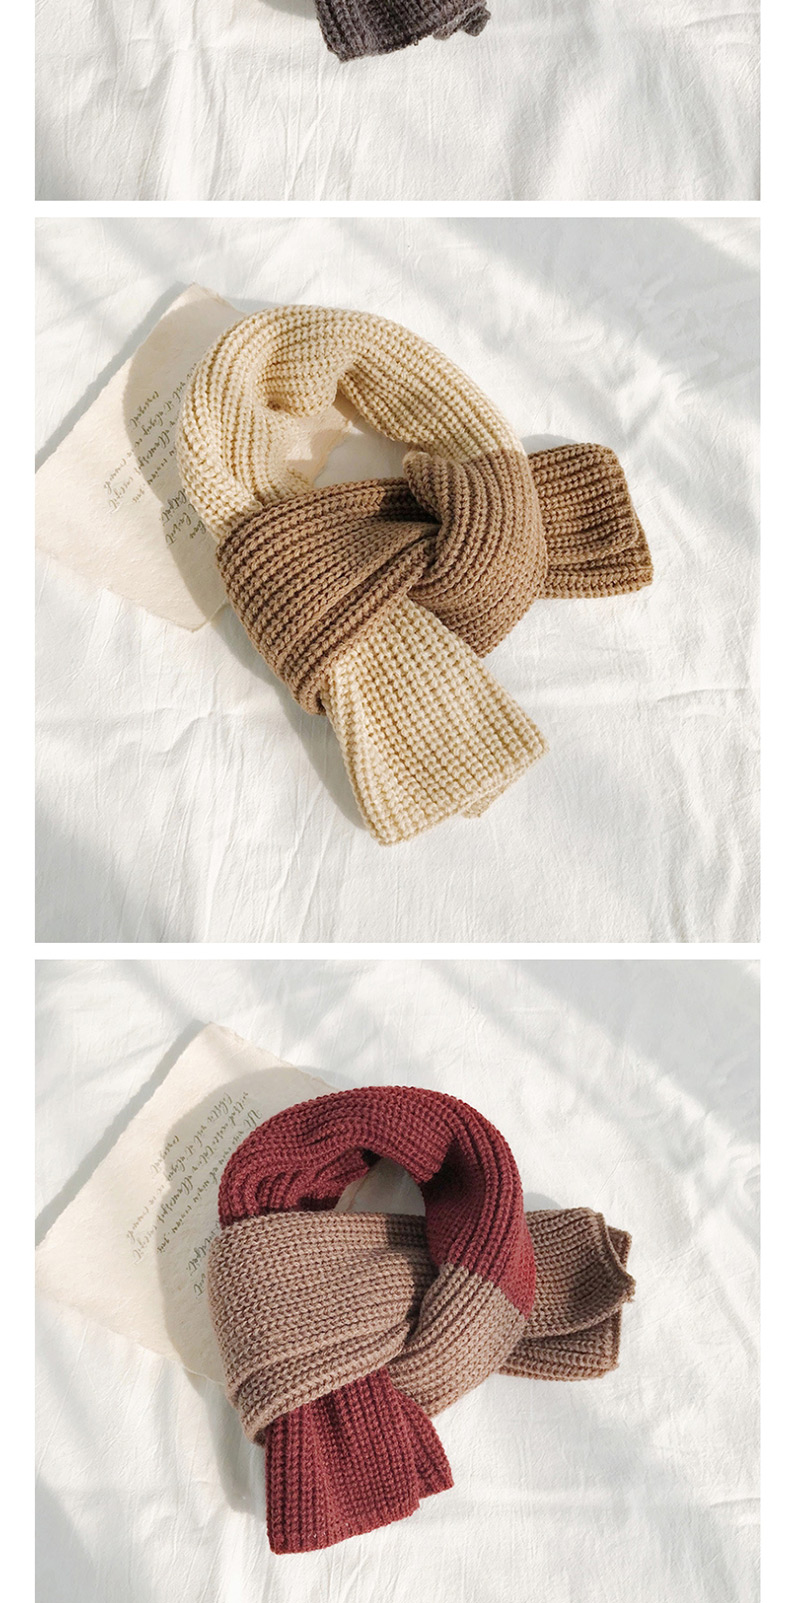 Fashion Two-tone Stitching Black + White Stitched Two-tone Knit Short Scarf,knitting Wool Scaves